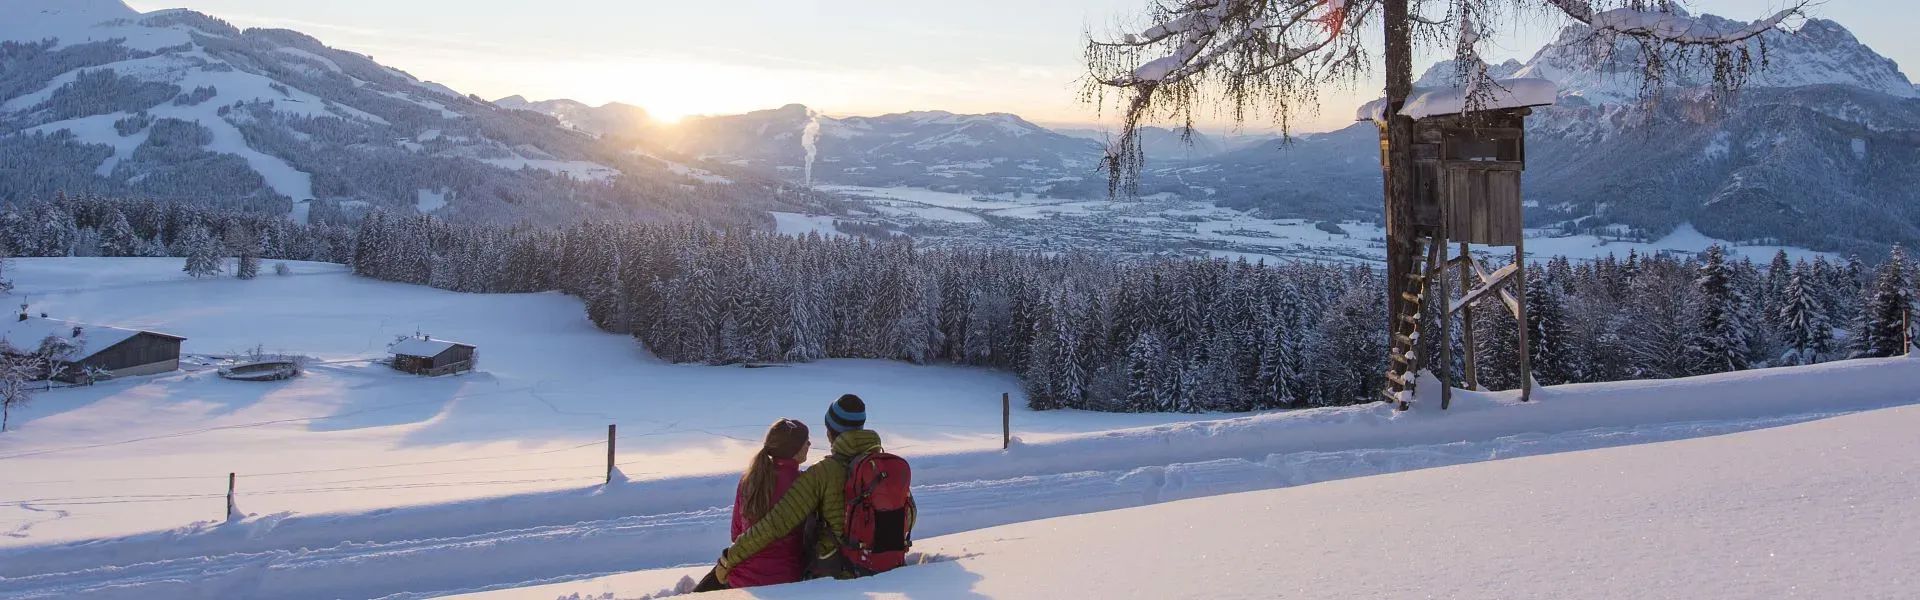 Winterwanderer beim Sonnenuntergang - Region St. Johann in Tirol